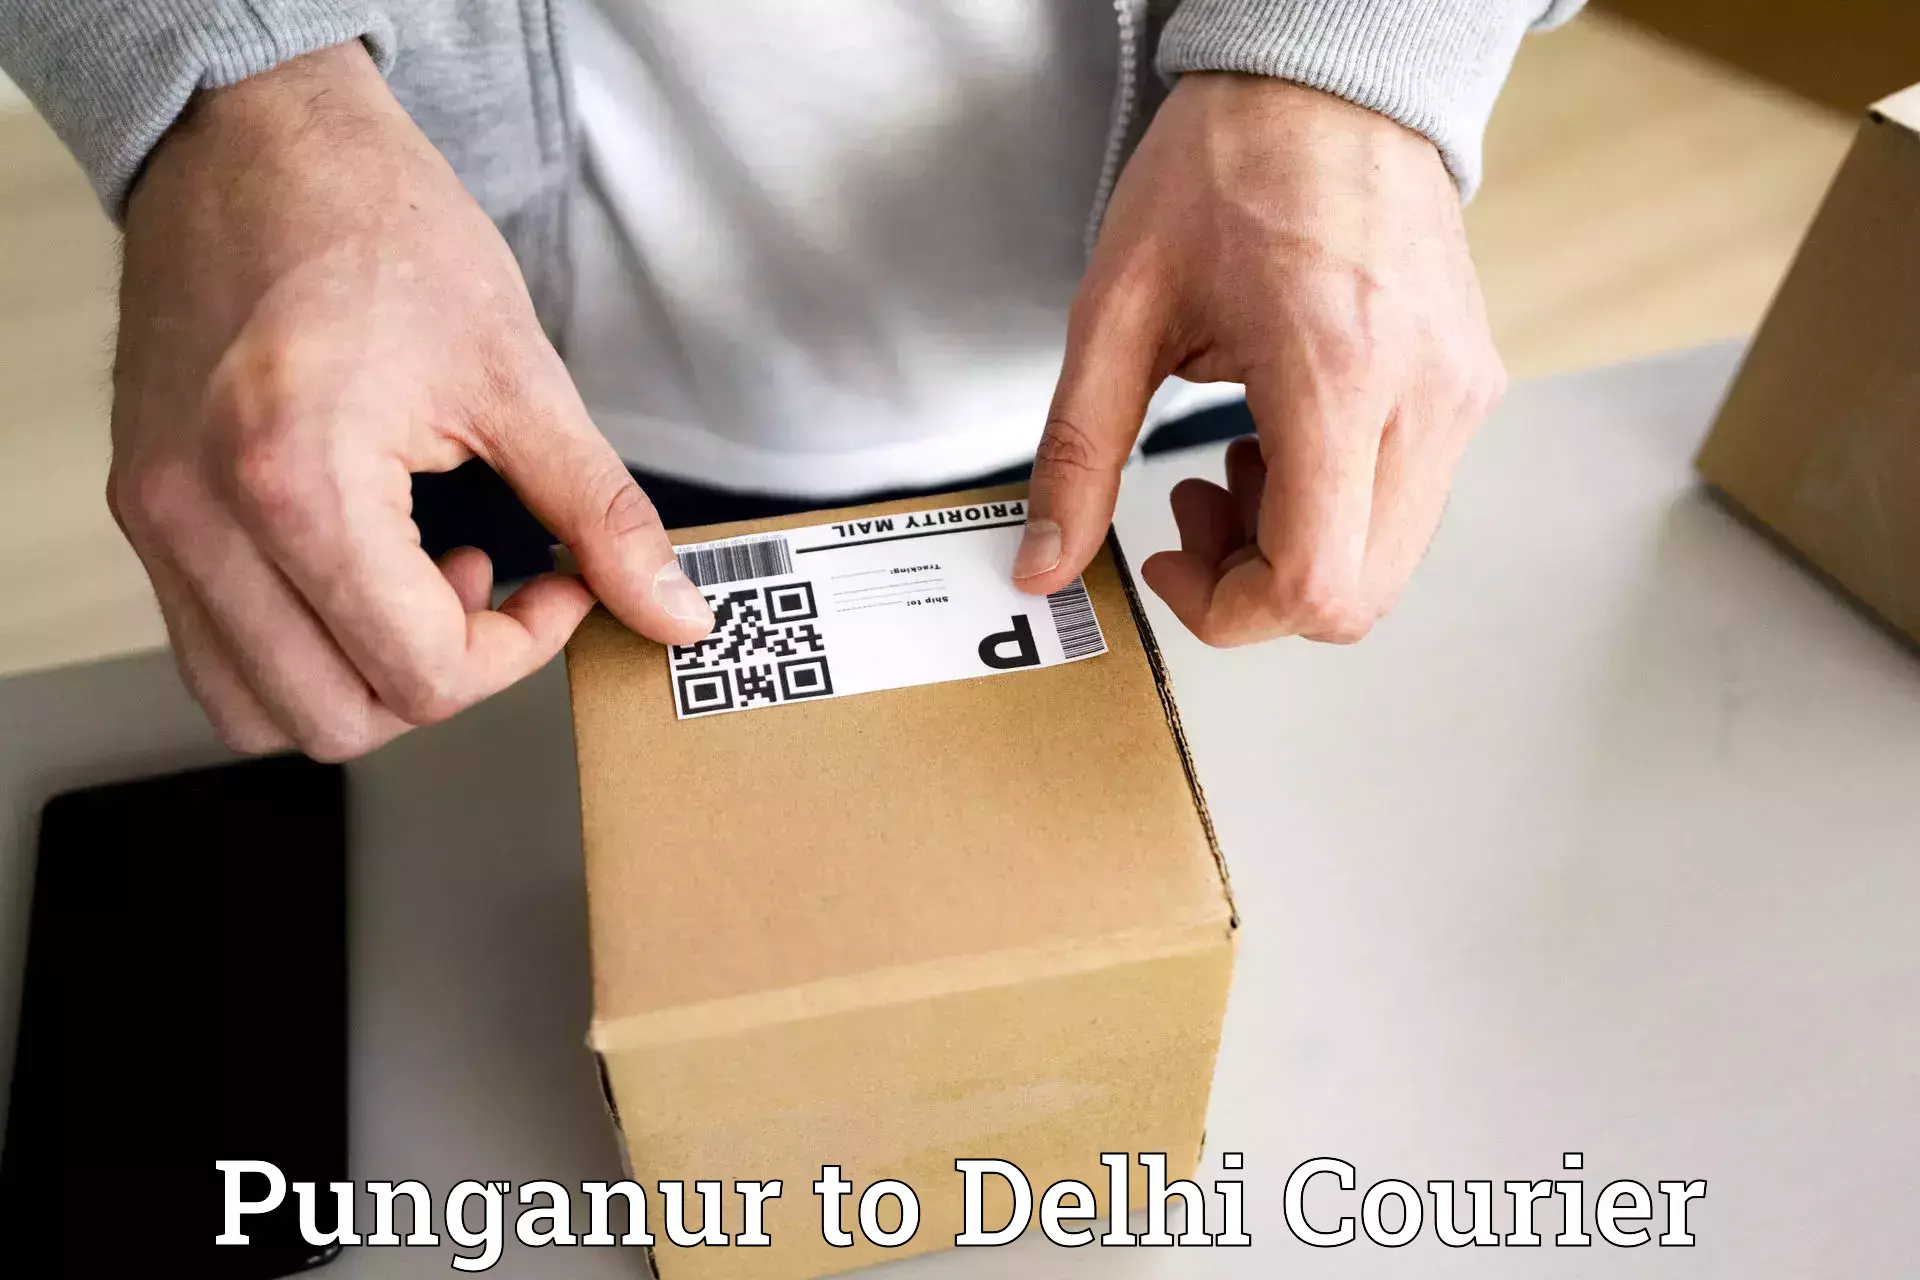 Courier service comparison Punganur to NCR